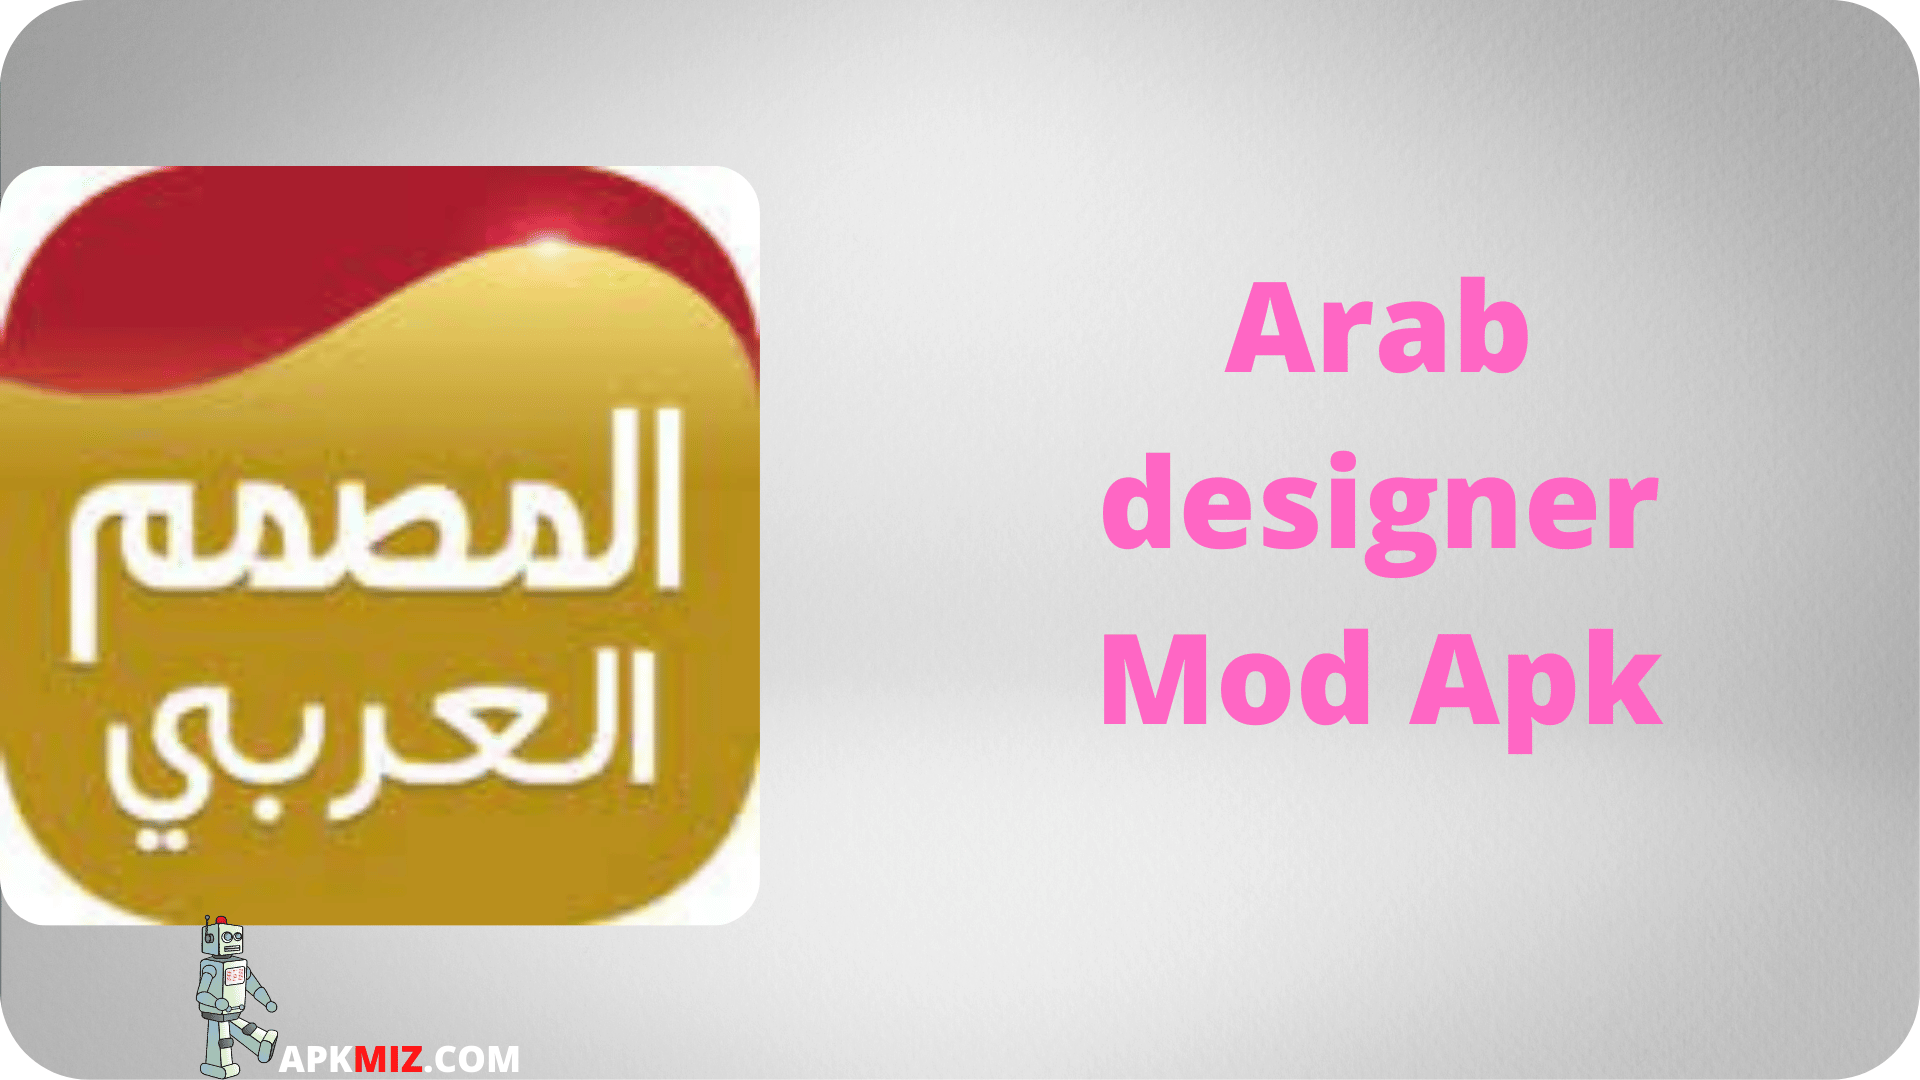 Arab designer Mod Apk